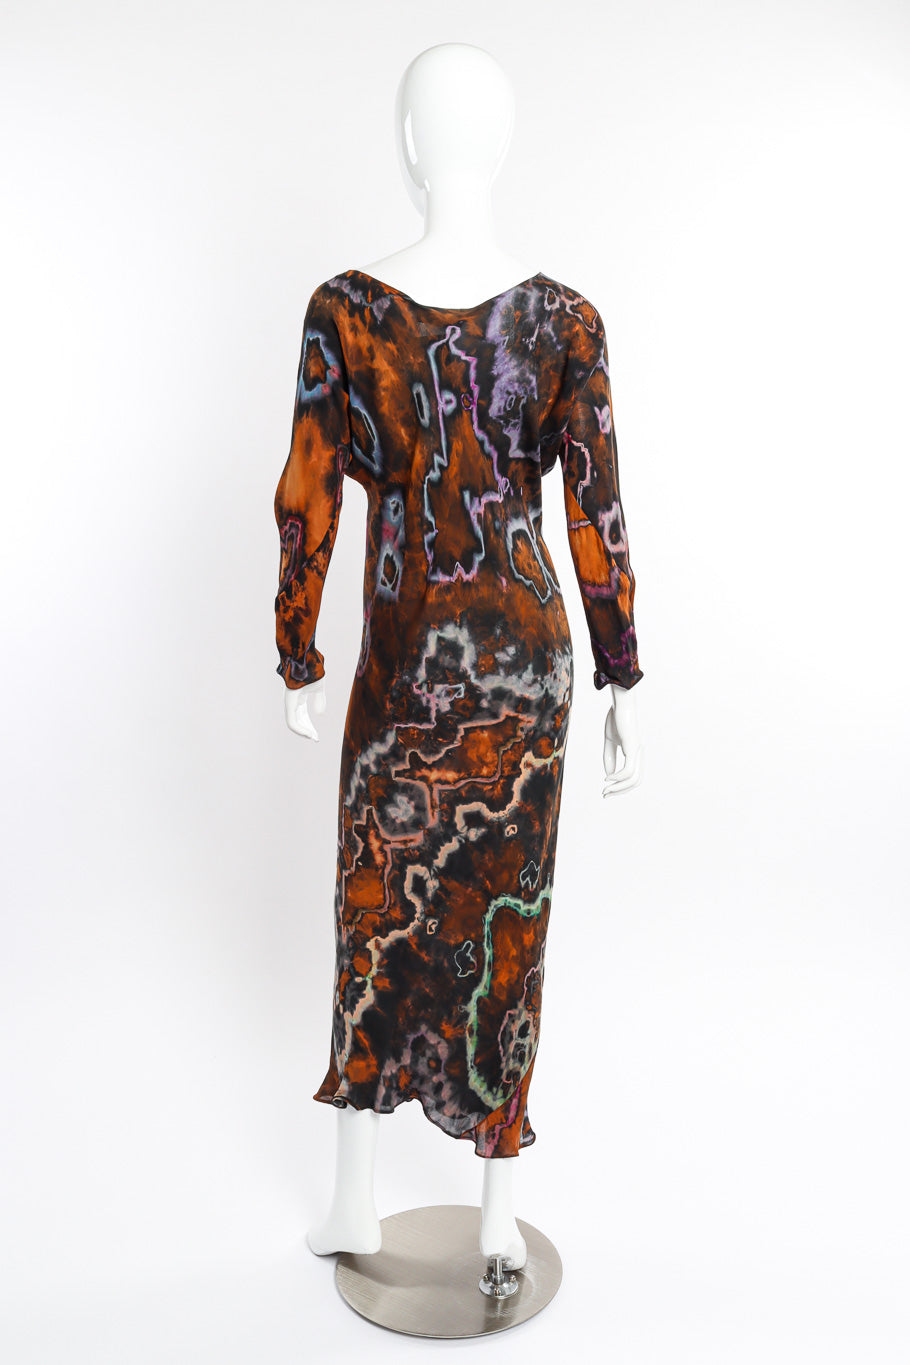 Silk Tie-Dye Bias Dress by Carter Smith on mannequin back @recessla